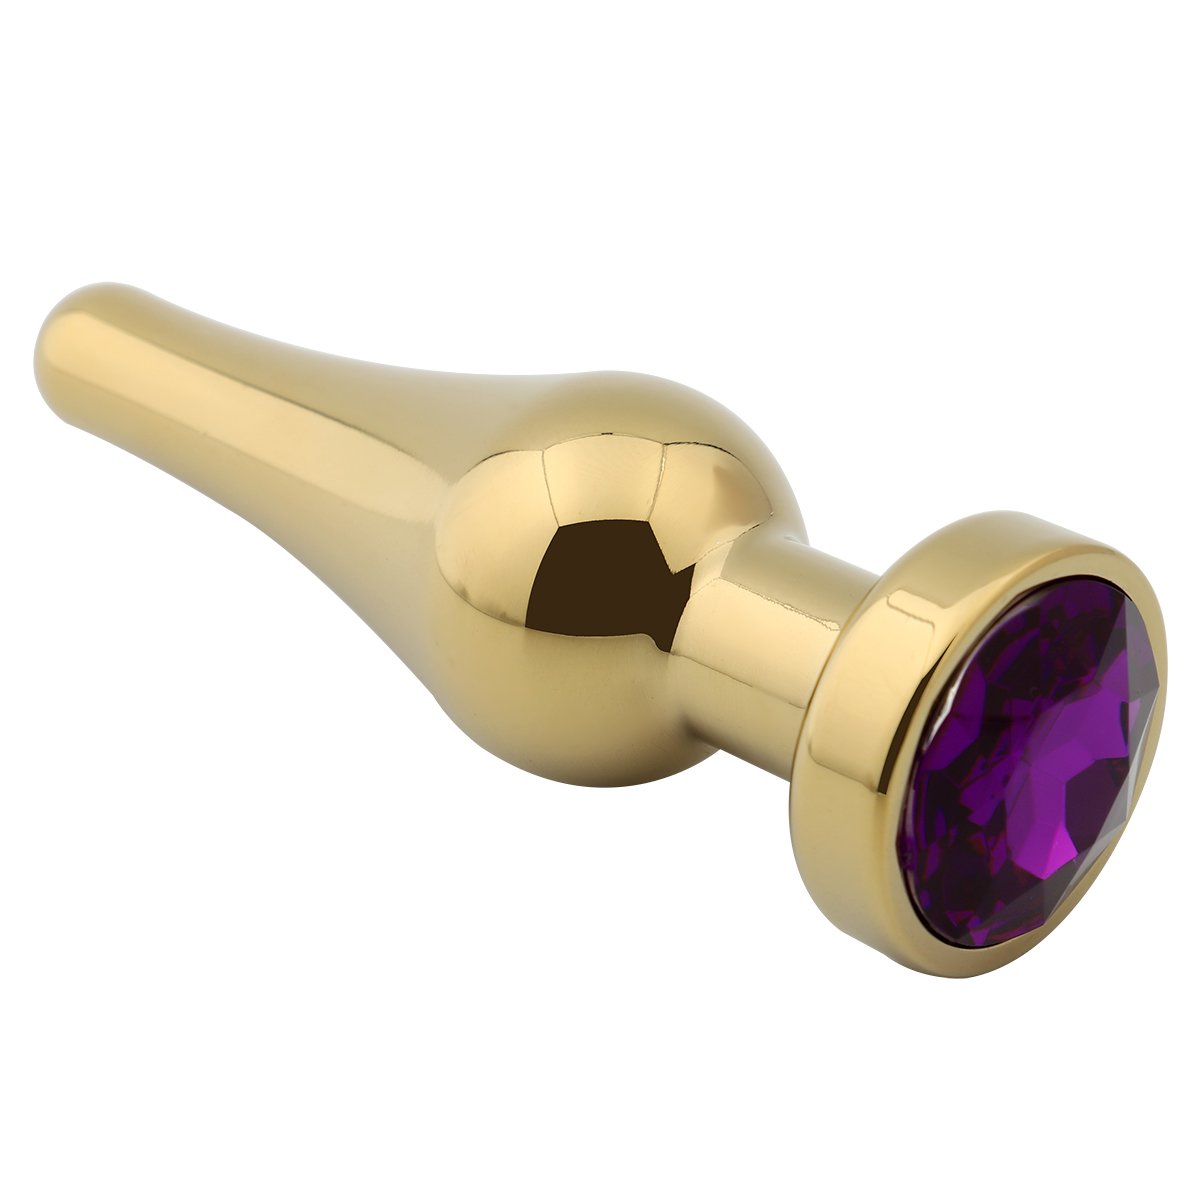 Foto van Banoch - Buttplug Lacrima Gold Purple- Large - Metalen buttplug - Diamant steen - Paars